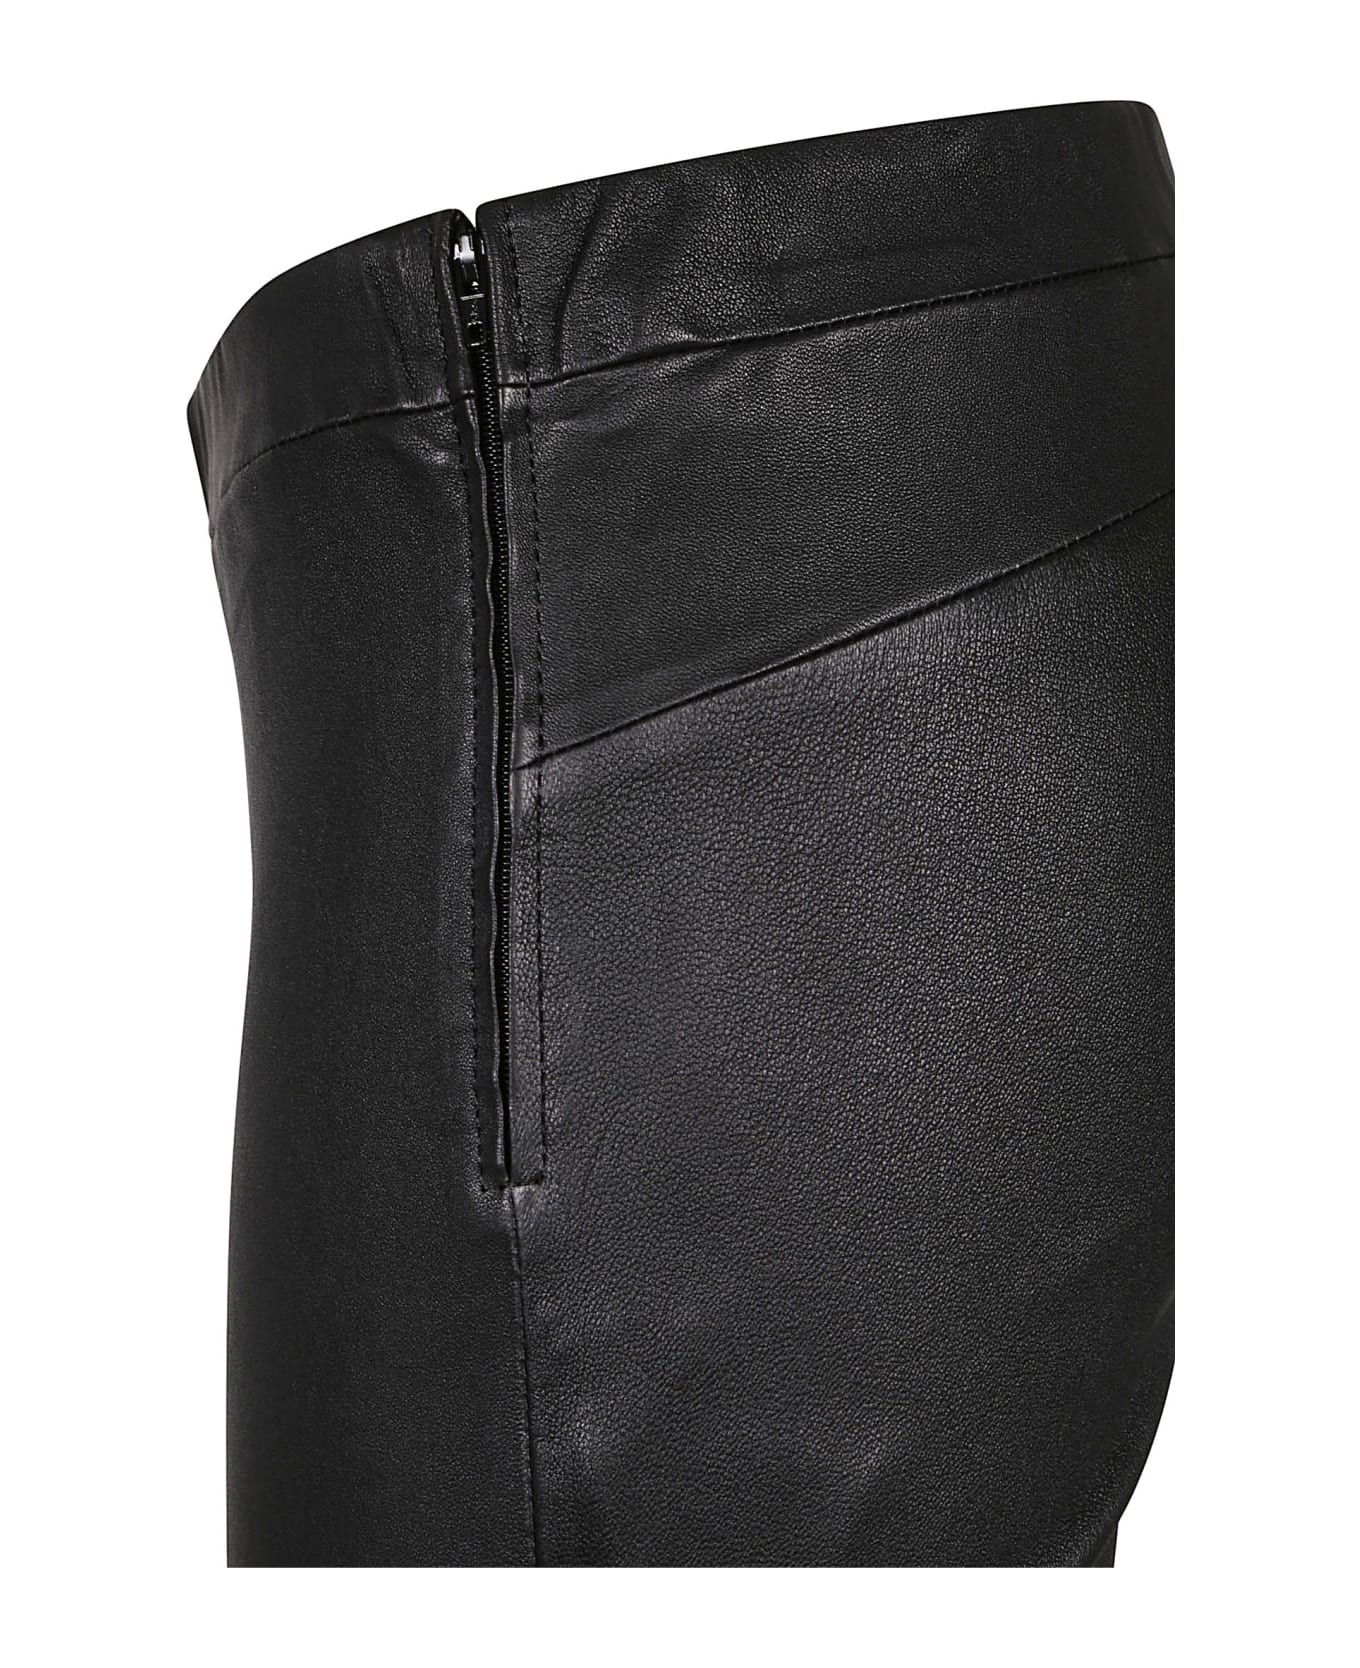 ARMA Trousers Black - Black